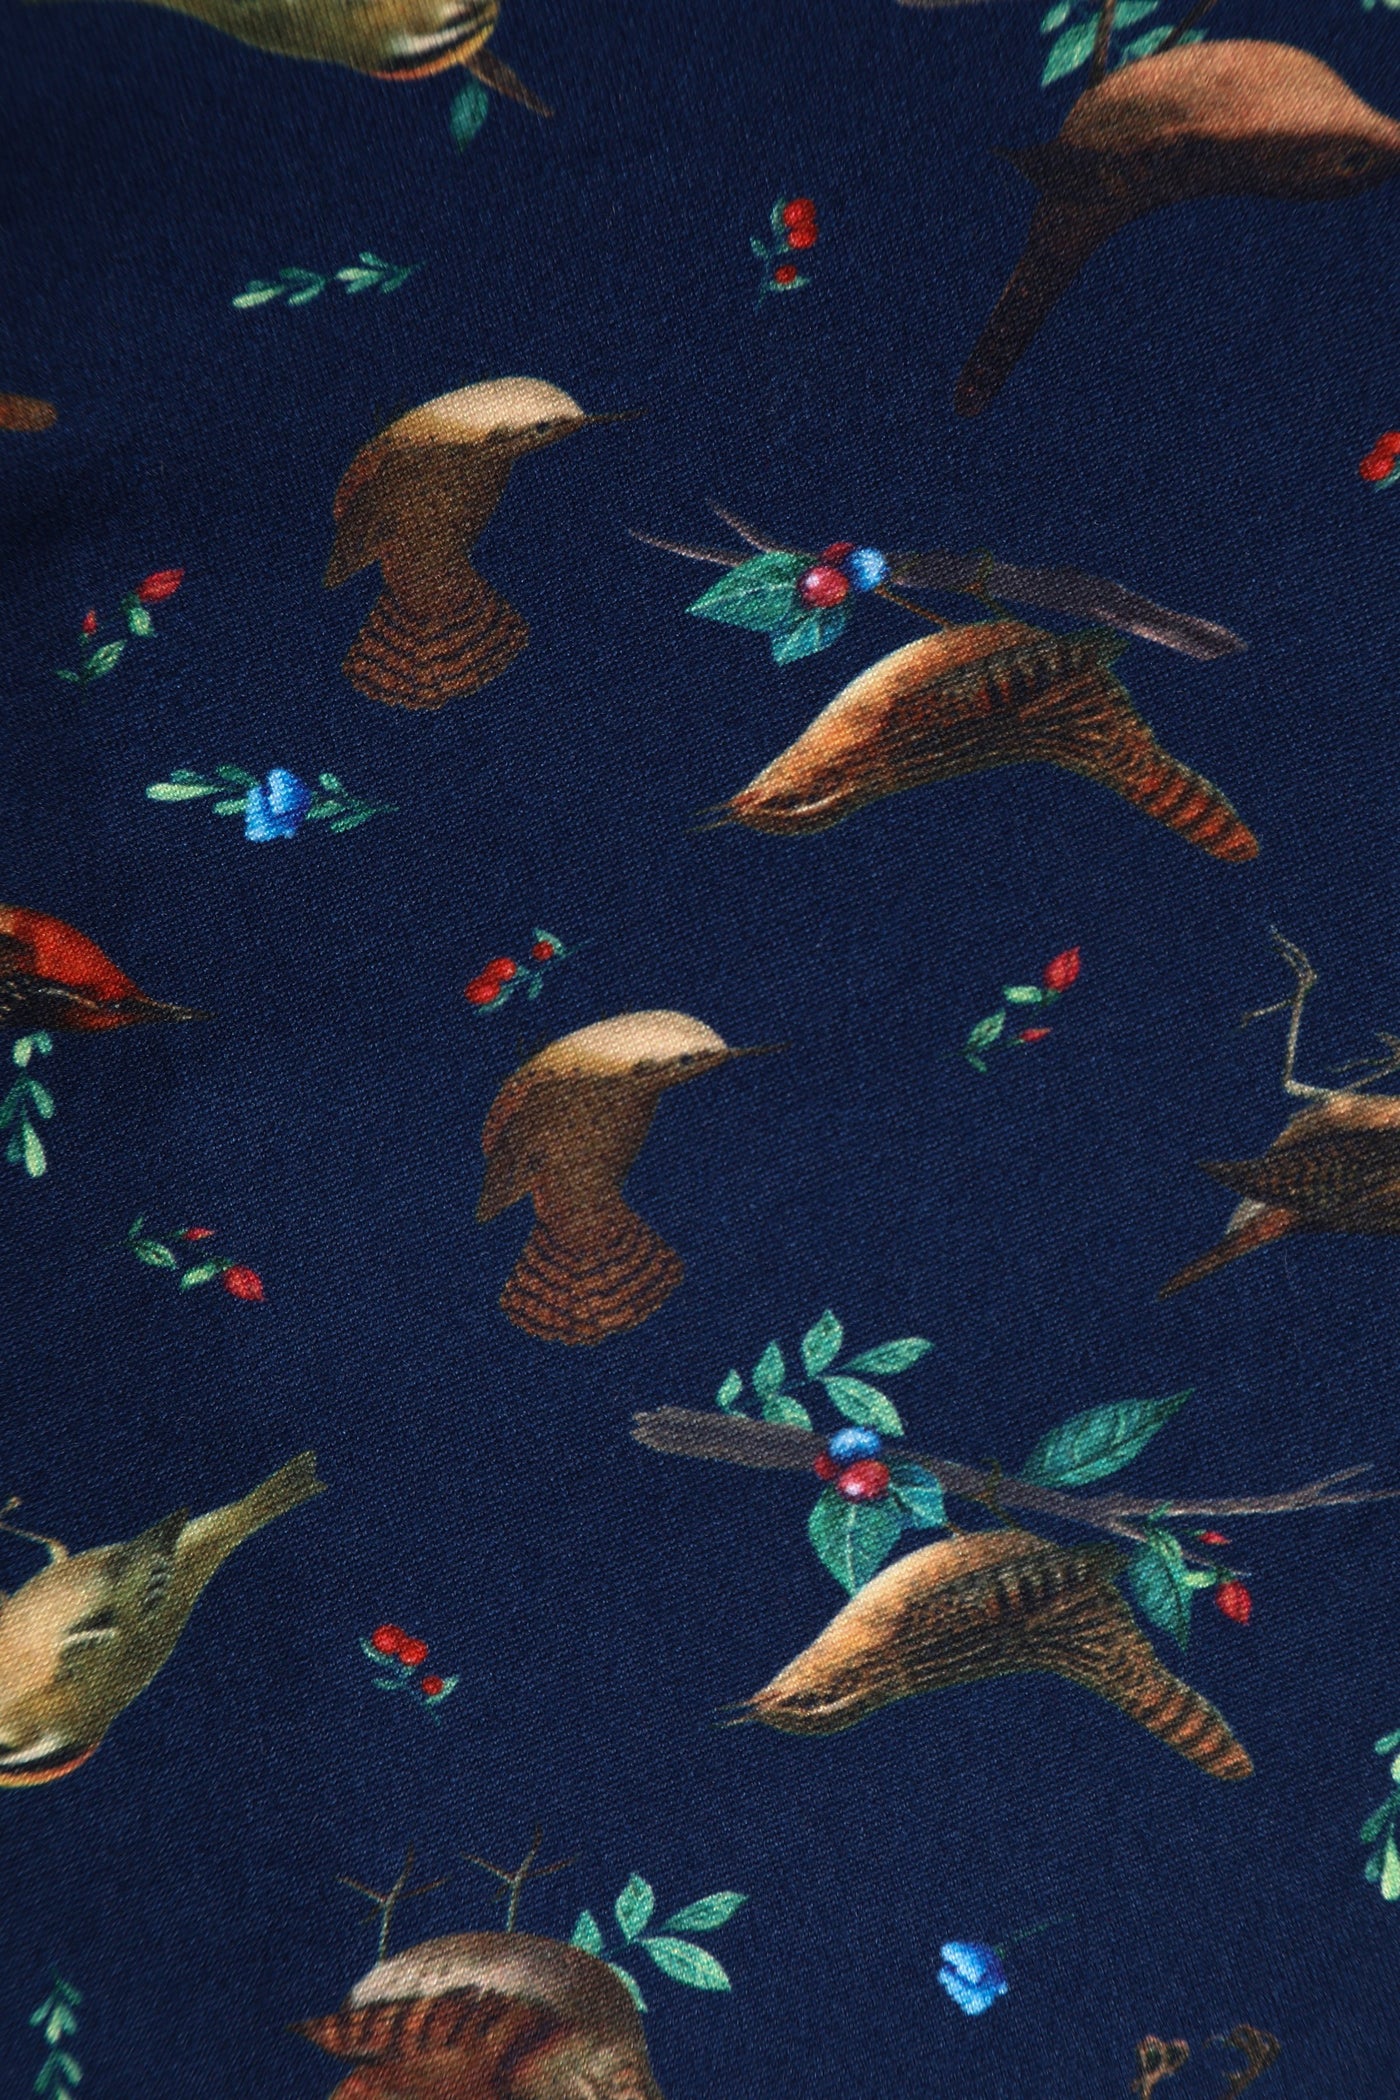 Close up view of navy blue bird print sleeved swing dress